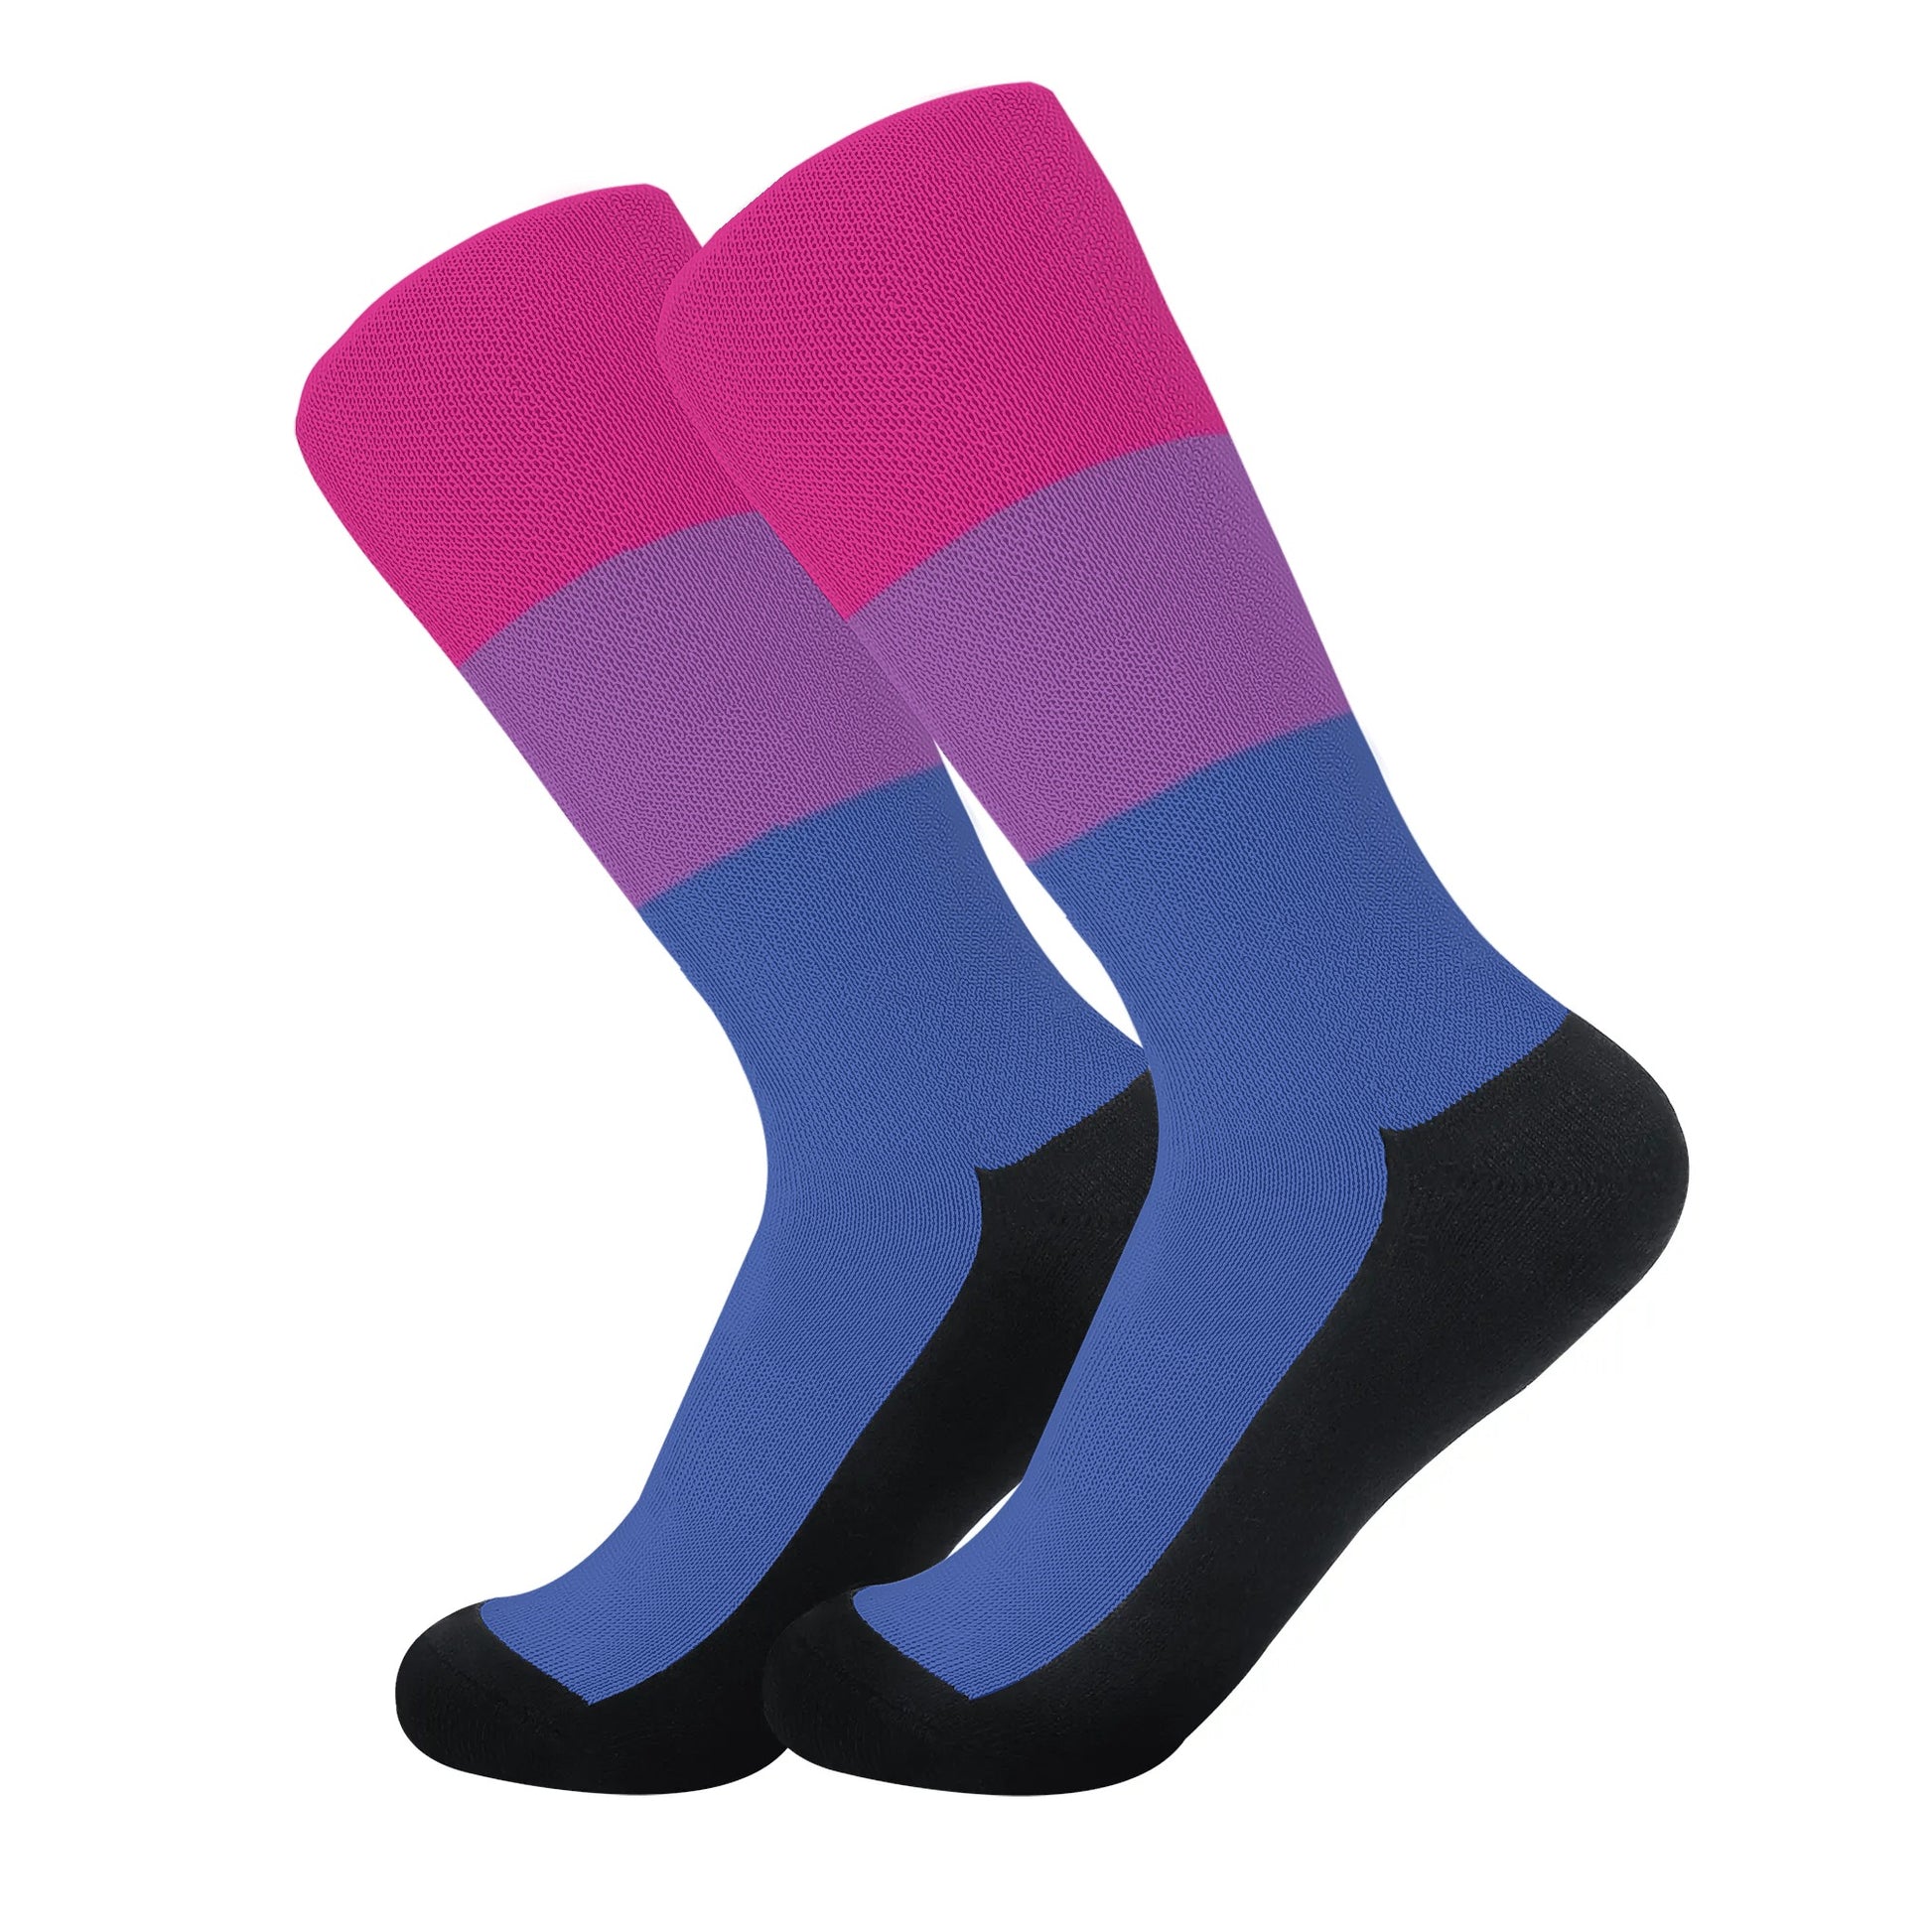 Bisexual Pride Flag Crew Socks - Rose Gold Co. Shop